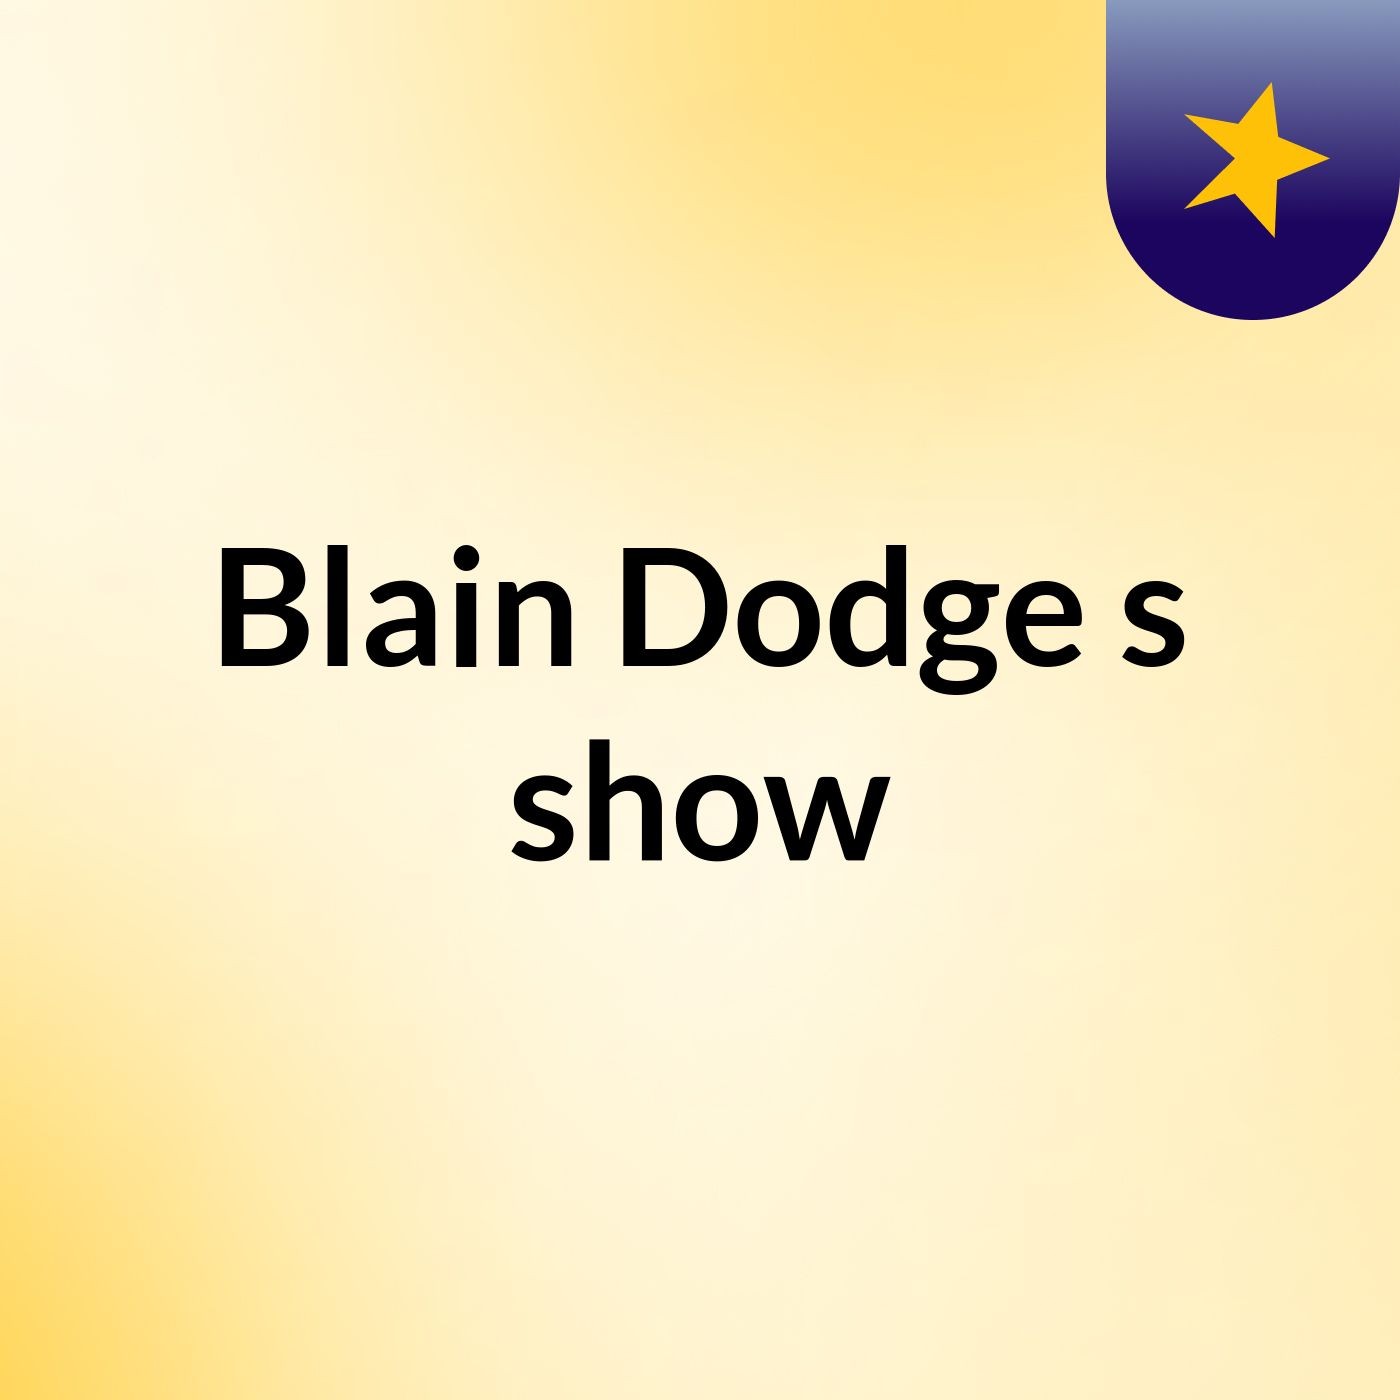 Blain Dodge's show